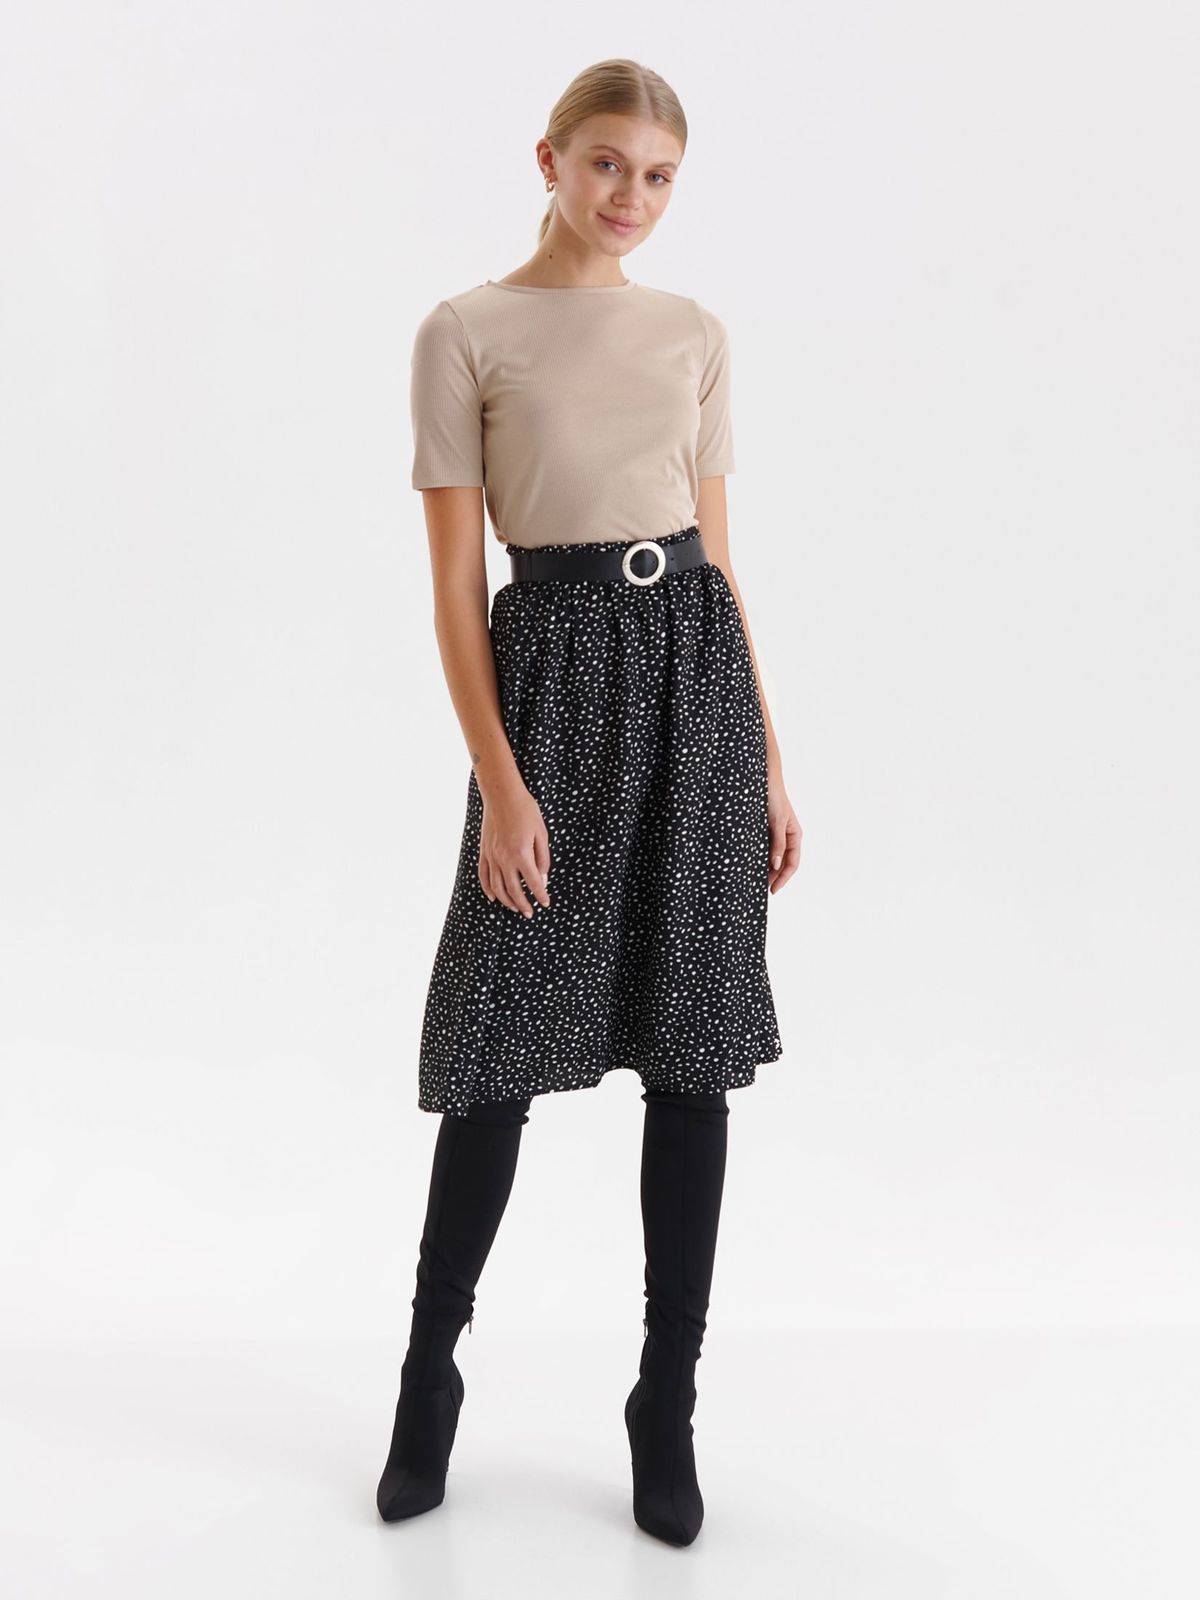 Black skirt thin fabric midi flaring cut accessorized with belt